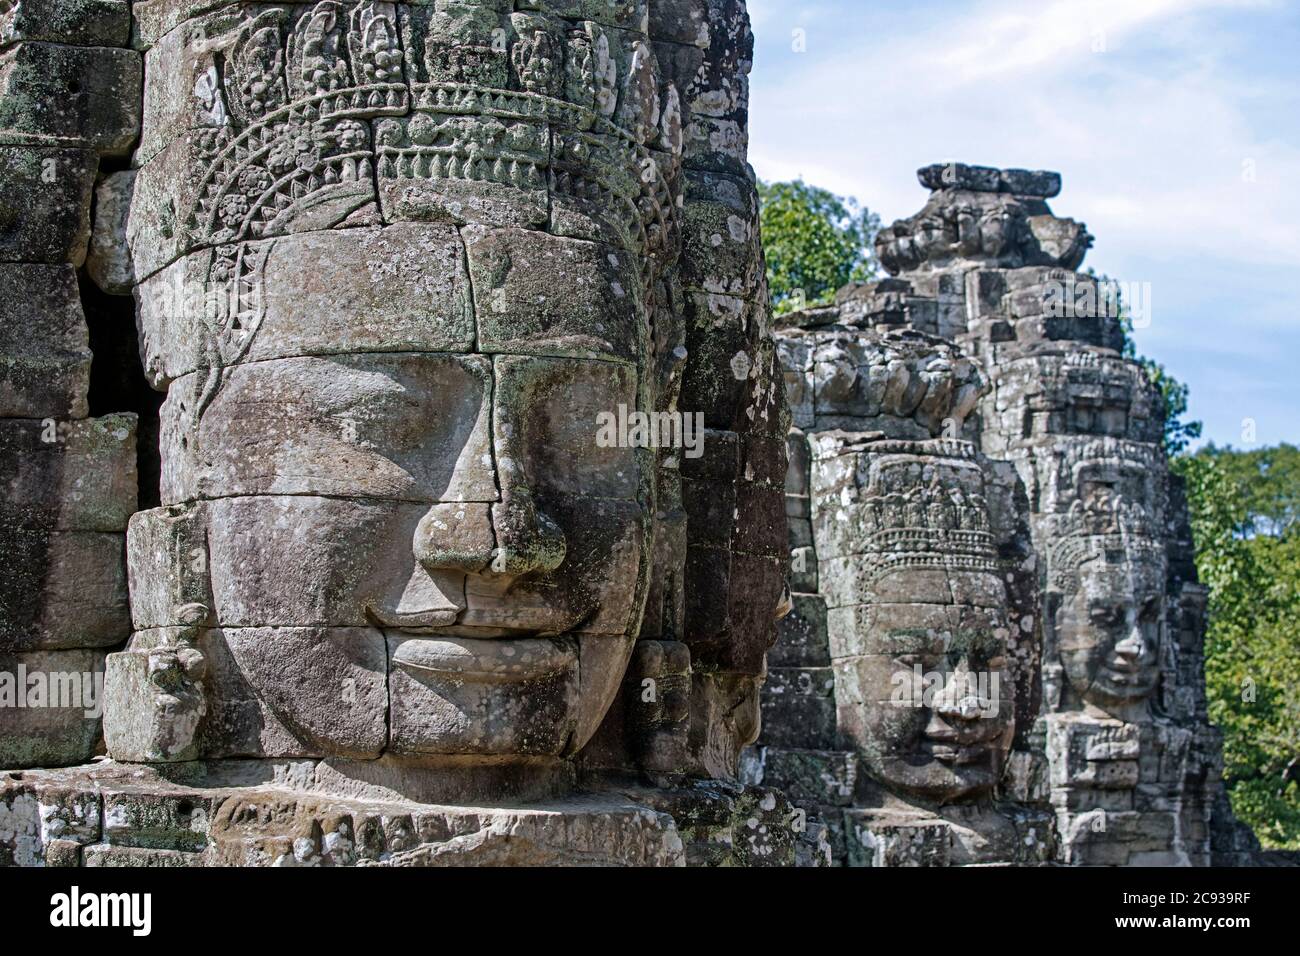 12th century stone faces at Angkor Thom / Nokor Thom, capital city of the Khmer Empire, Siem Reap, Cambodia Stock Photo